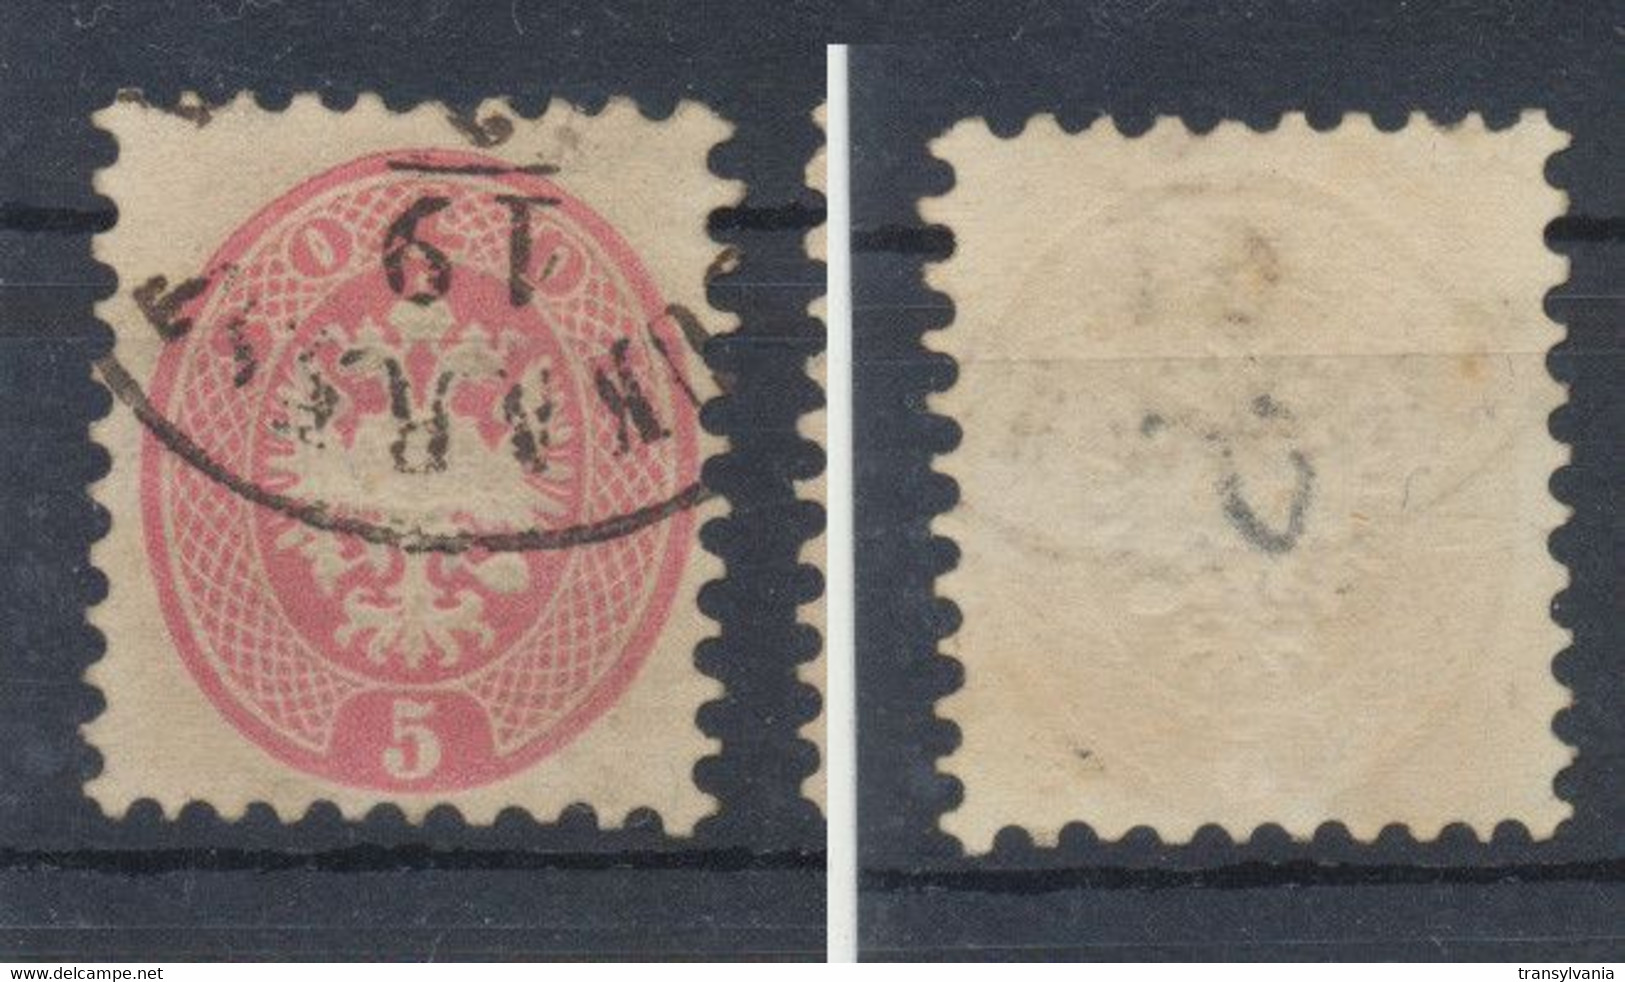 Romania 1864 Austria Post In Levant 5 Kreuzer Stamp With Bukarest Rekomandirt Cancellation Applied At Bucuresti - Besetzungen